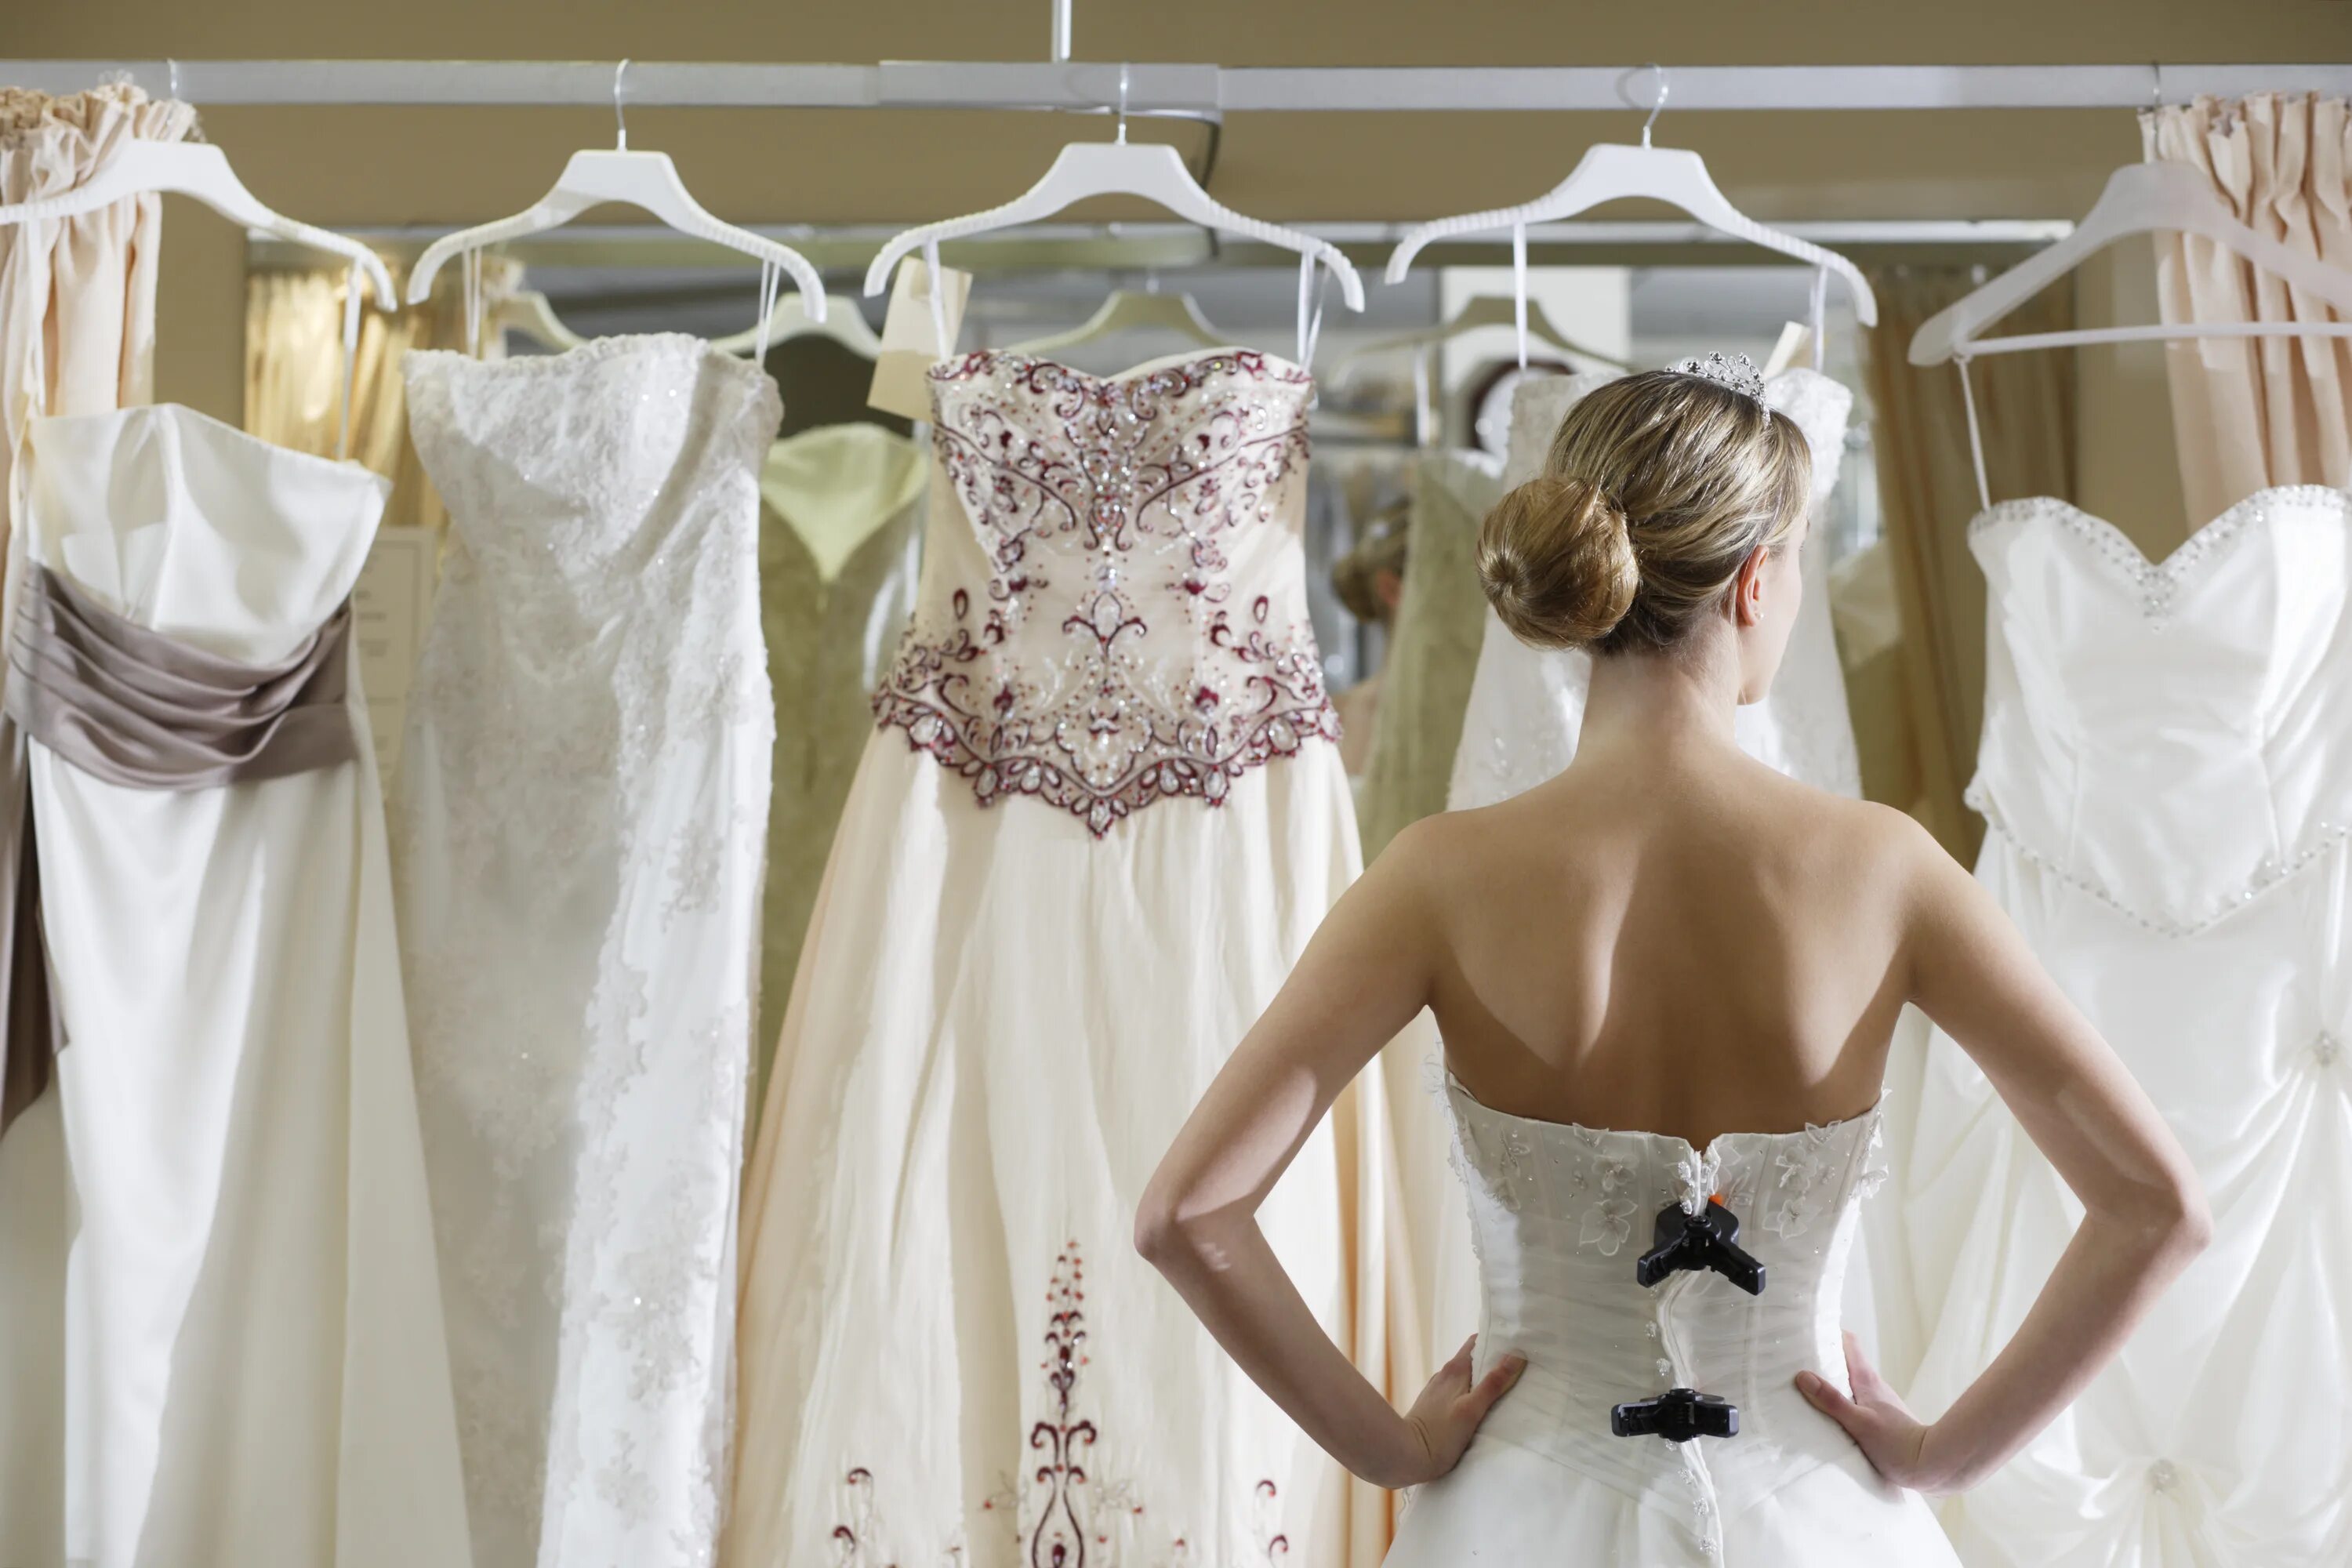 Примерка свадебного платья. Свадебные платья. Салон свадебных платьев. Платье невесты.